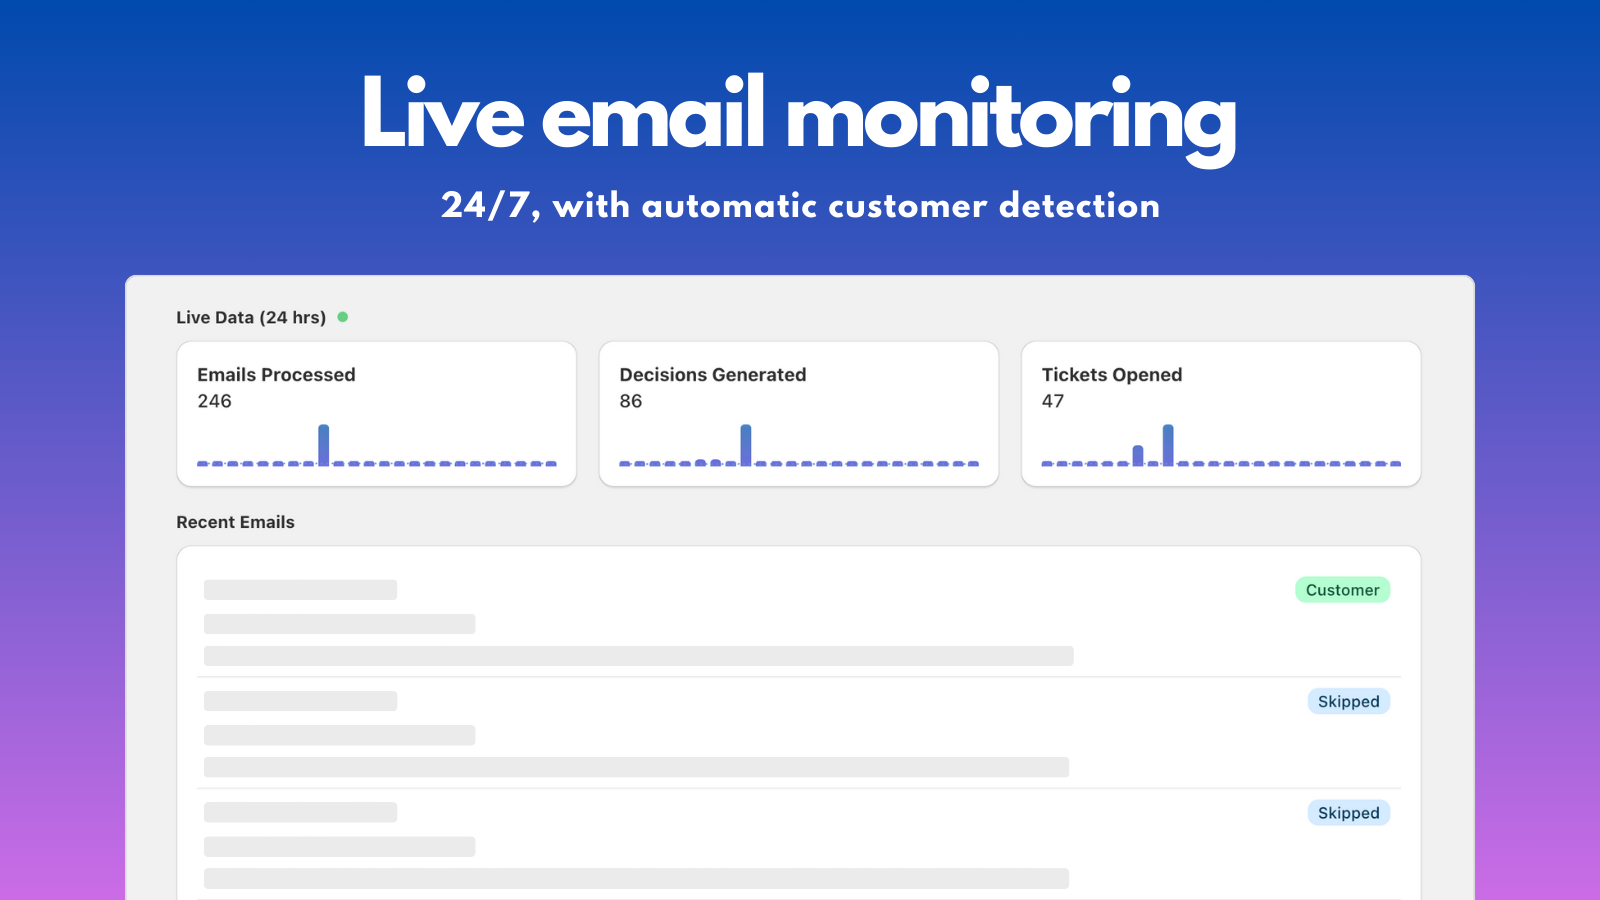 Monitoreo de correo electrónico en vivo